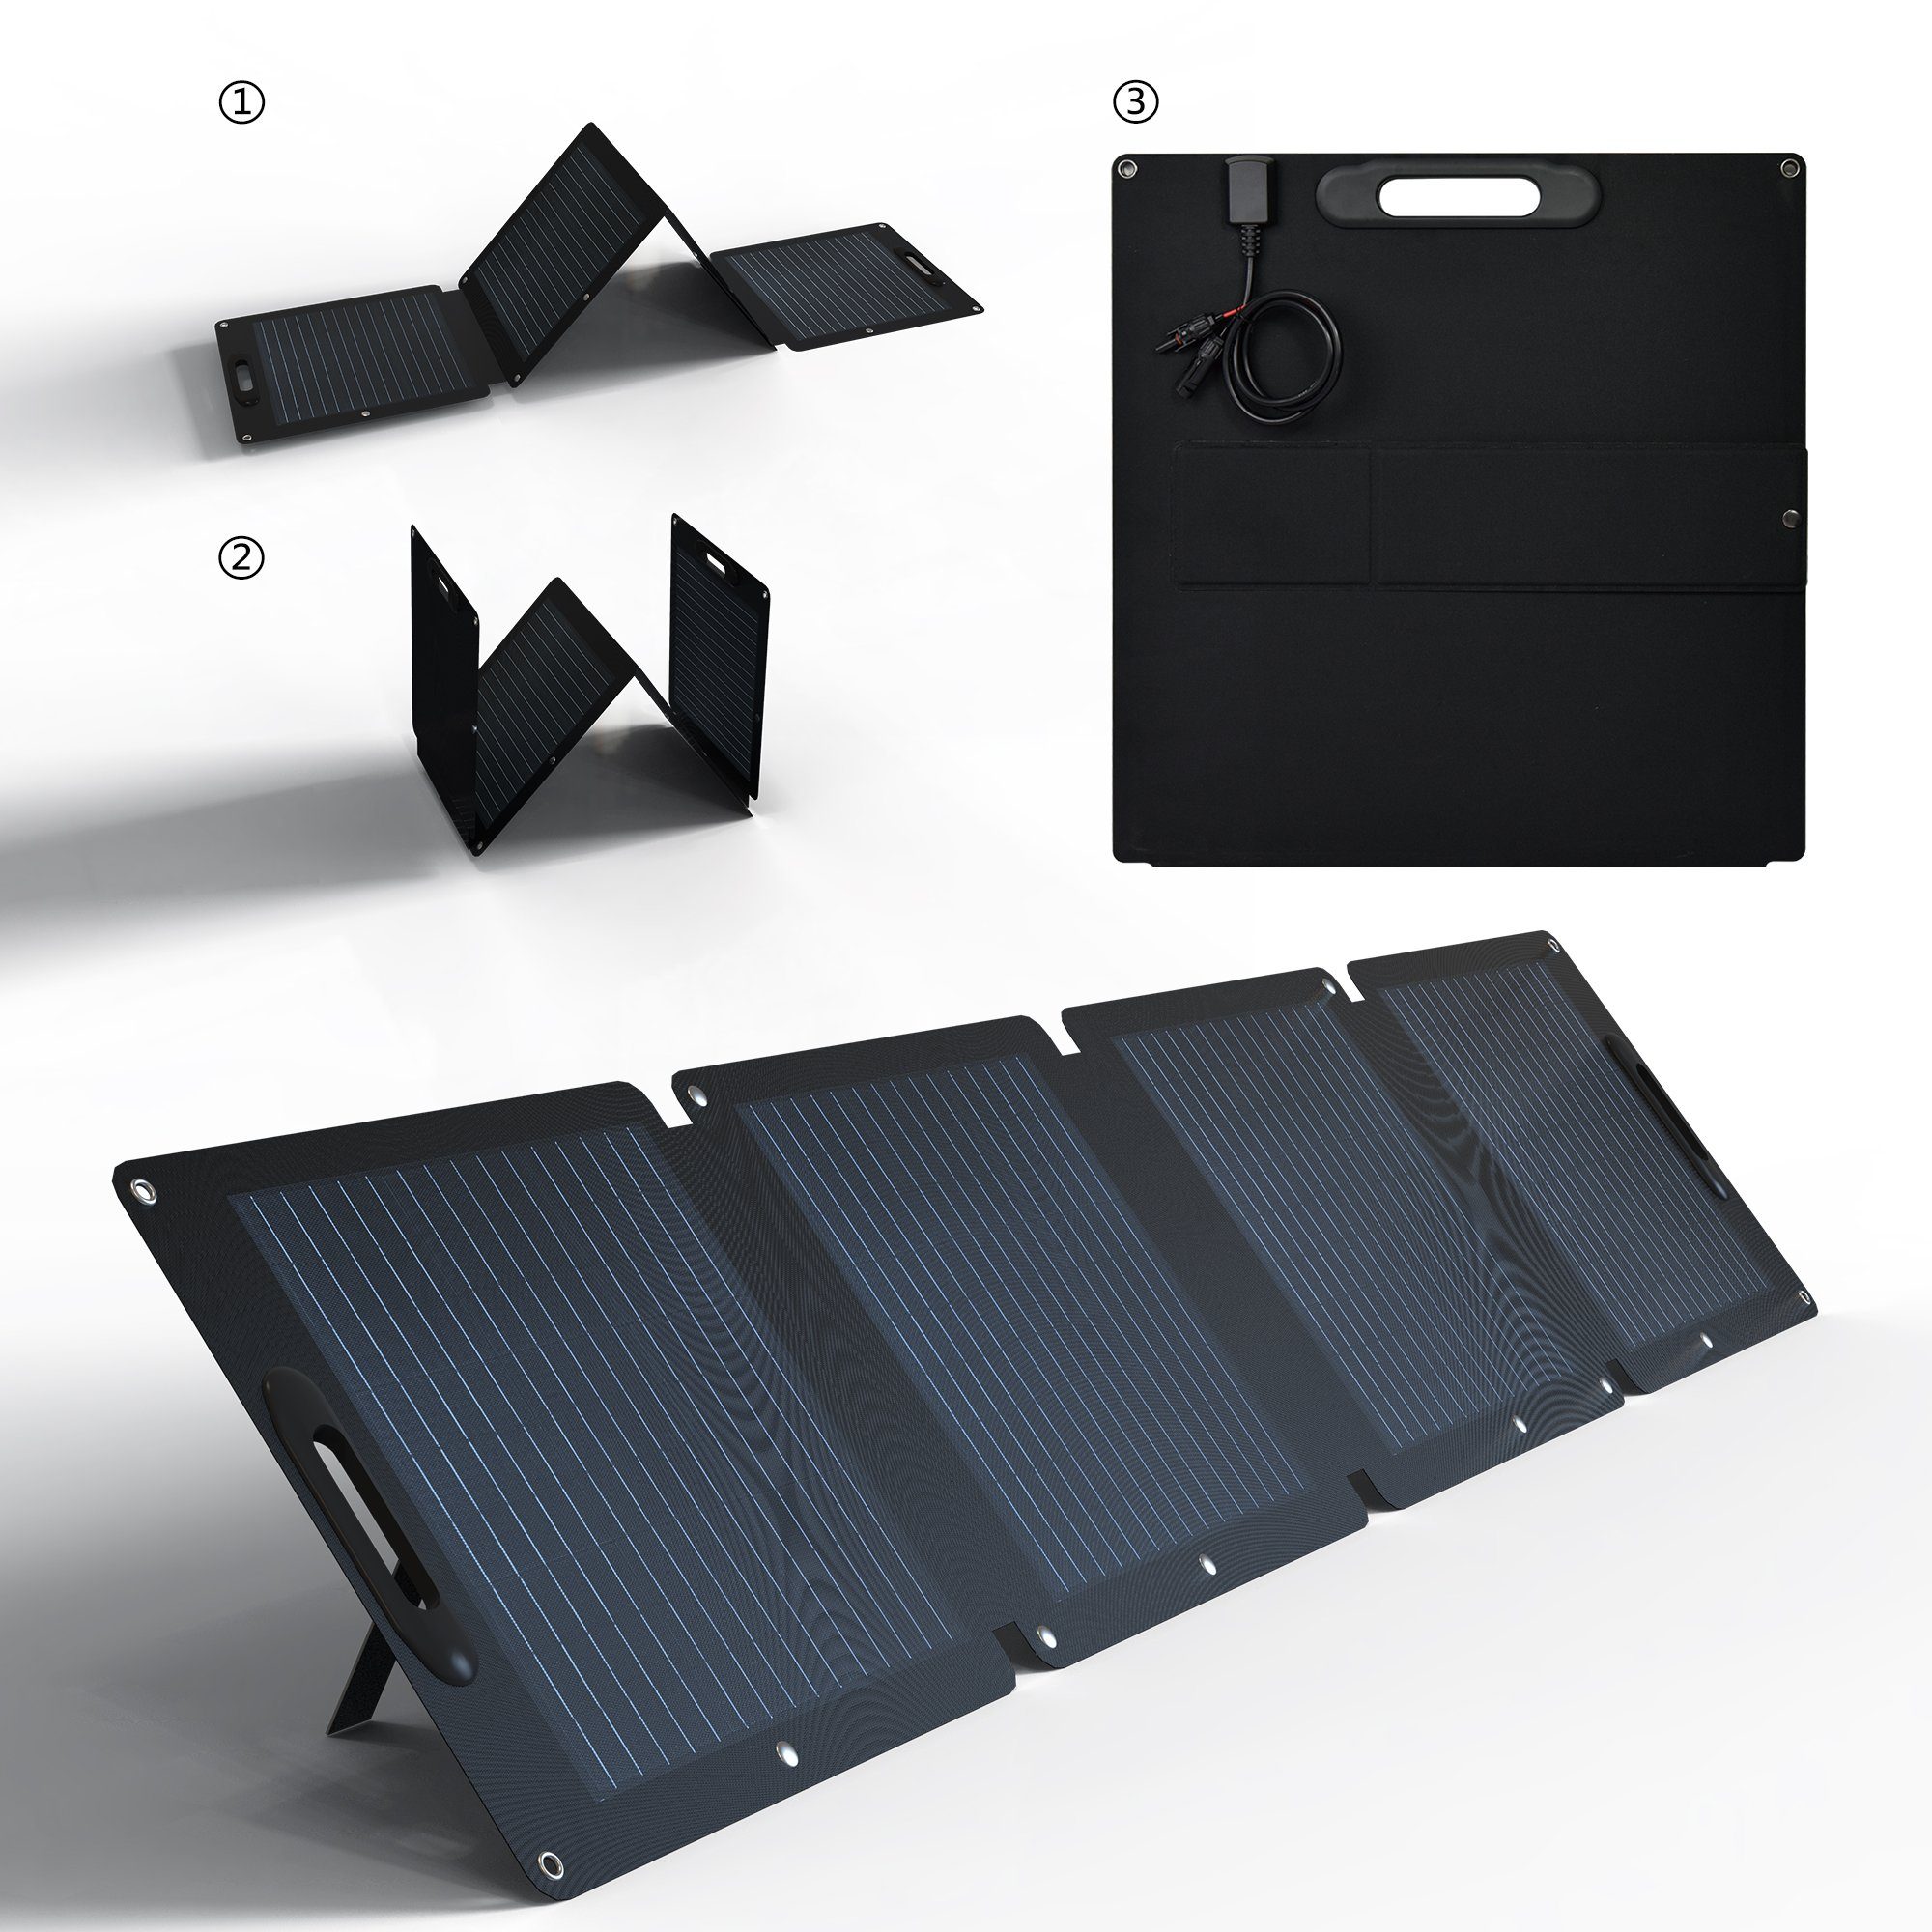 Merax Solaranlage SD200, 200,00 W, Monokristallin, Faltbar und Mobil, Solarmodul tragbar, Solarpanel wasserdicht